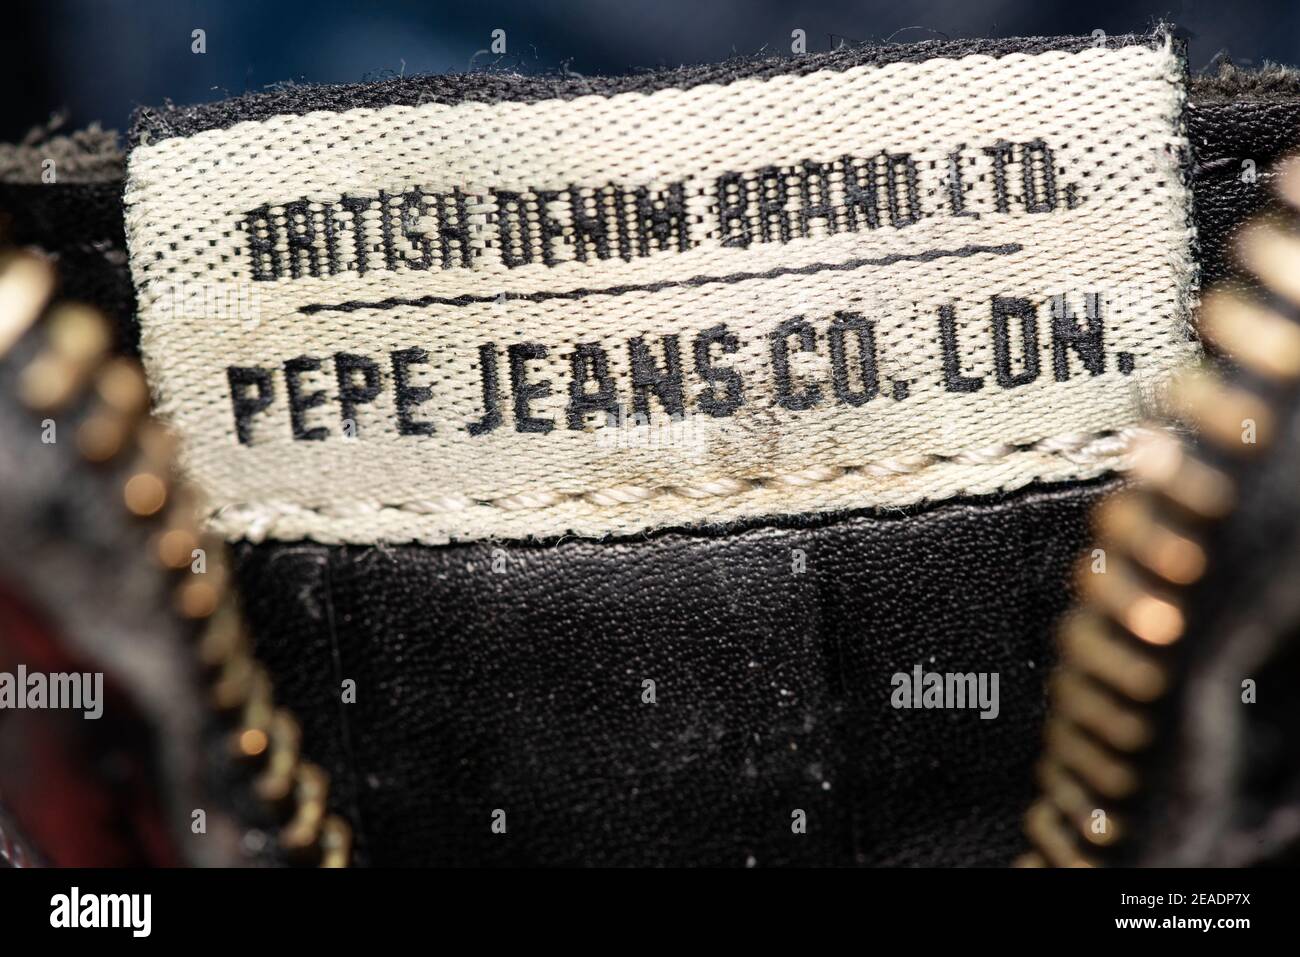 British Denim Brand Ltd. Pepe Jeans Co. London worn out shoe label on black leather men's boots close up detail Stock Photo